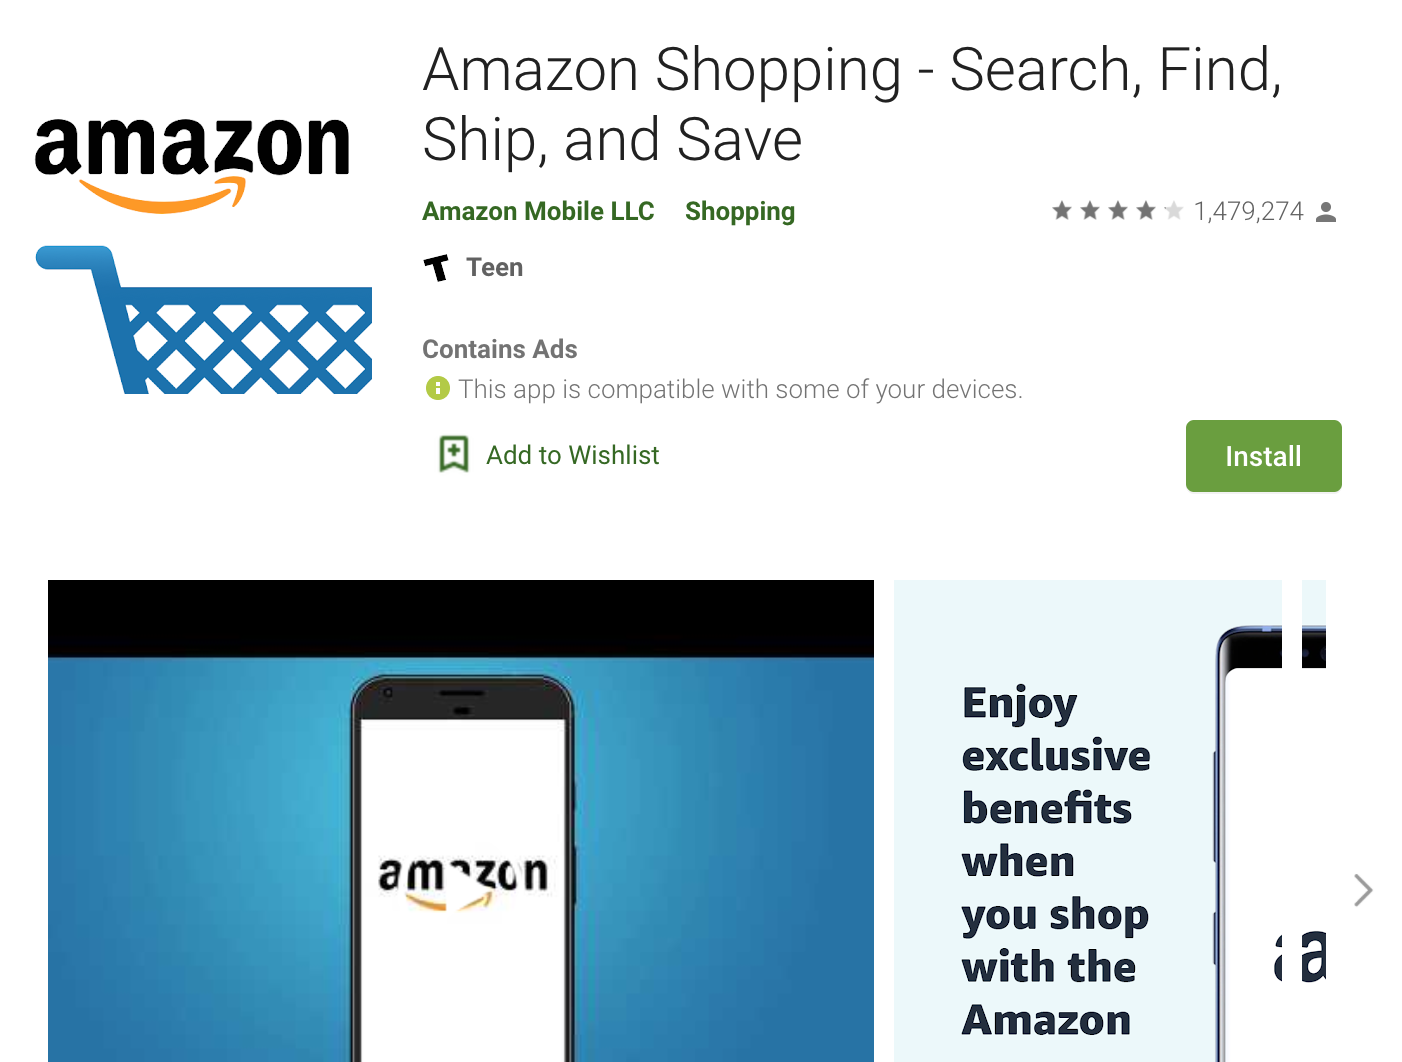 Amazon wish list private shipping address